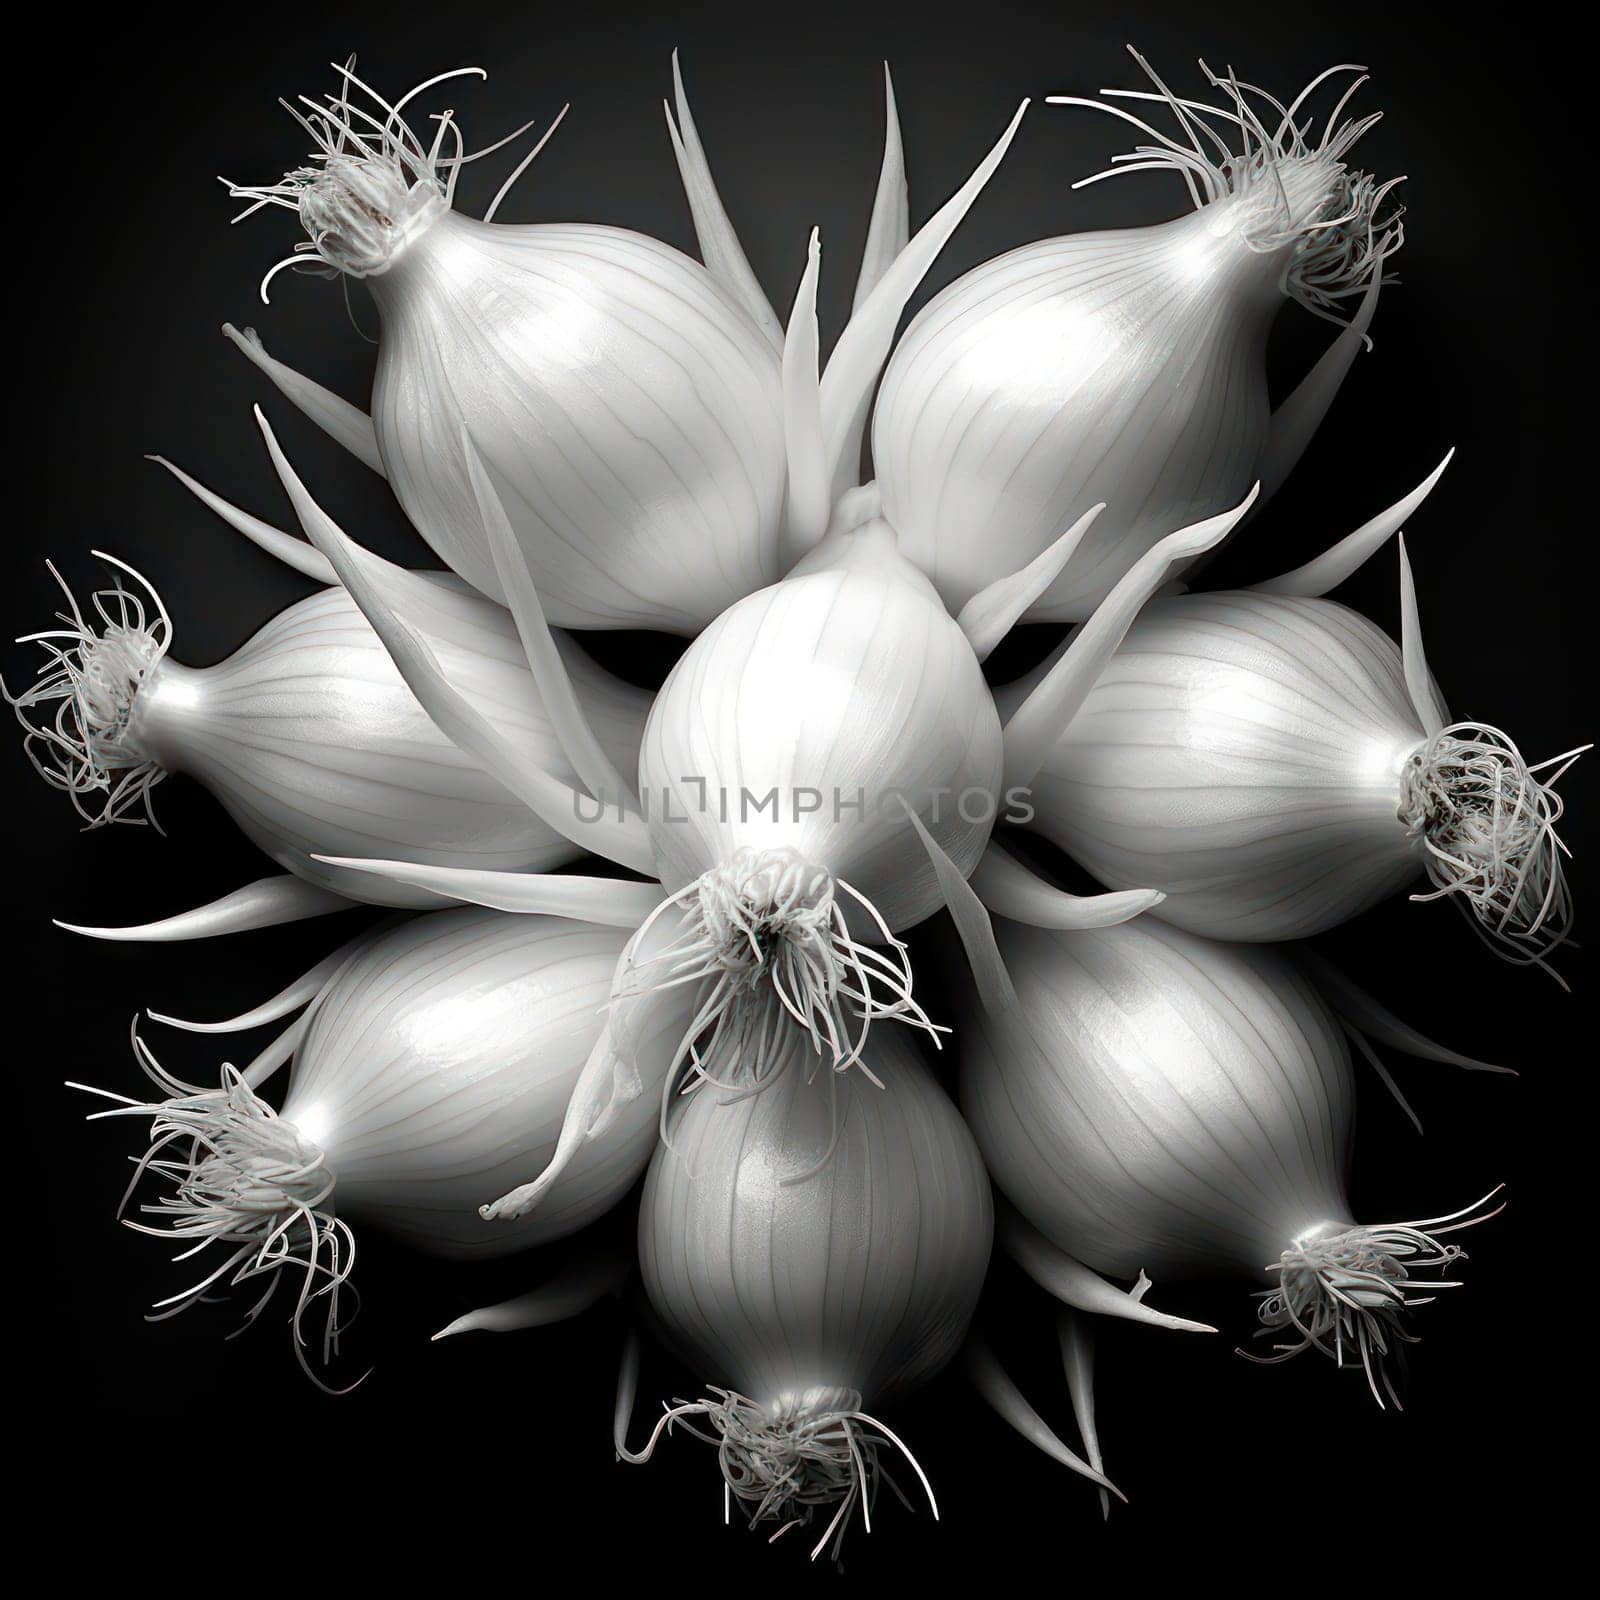 Organic Fresh Healthy Vegetables: A Closeup of Raw White Onion and Garlic Bulbs on a Dark Wooden Table by Vichizh